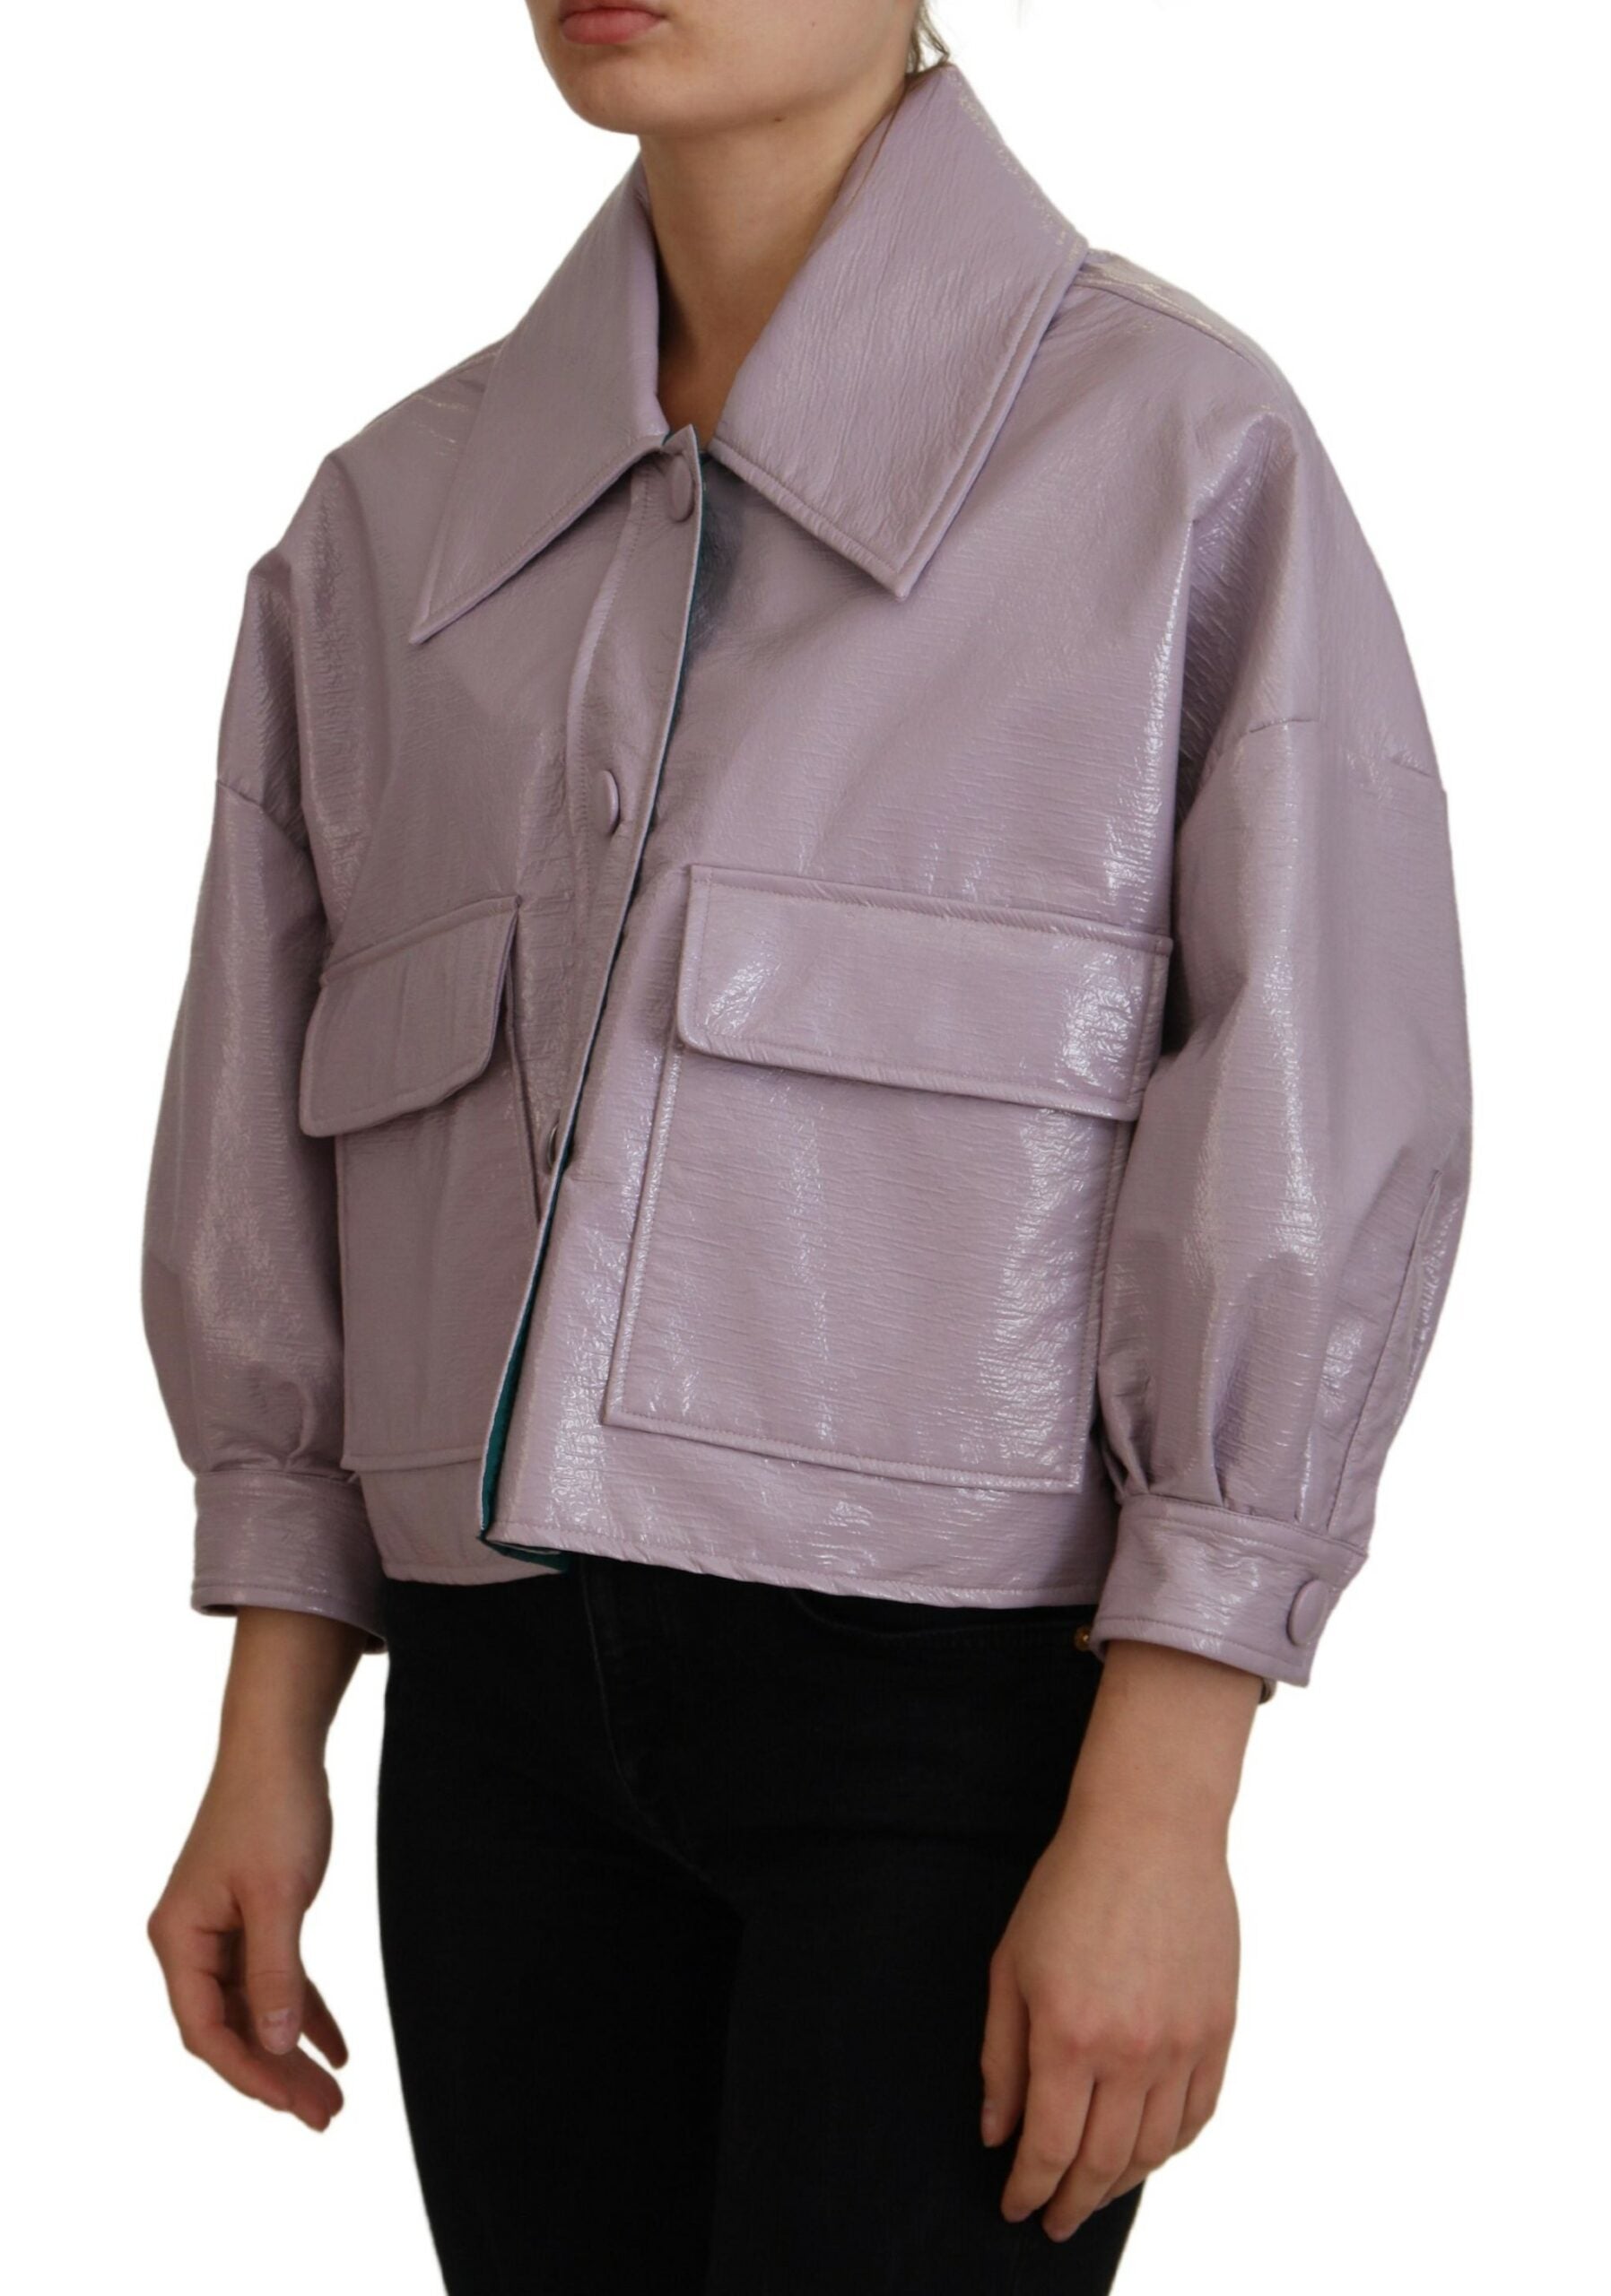 Dolce & Gabbana Chic Purple Cropped Jacket - A Style Statement